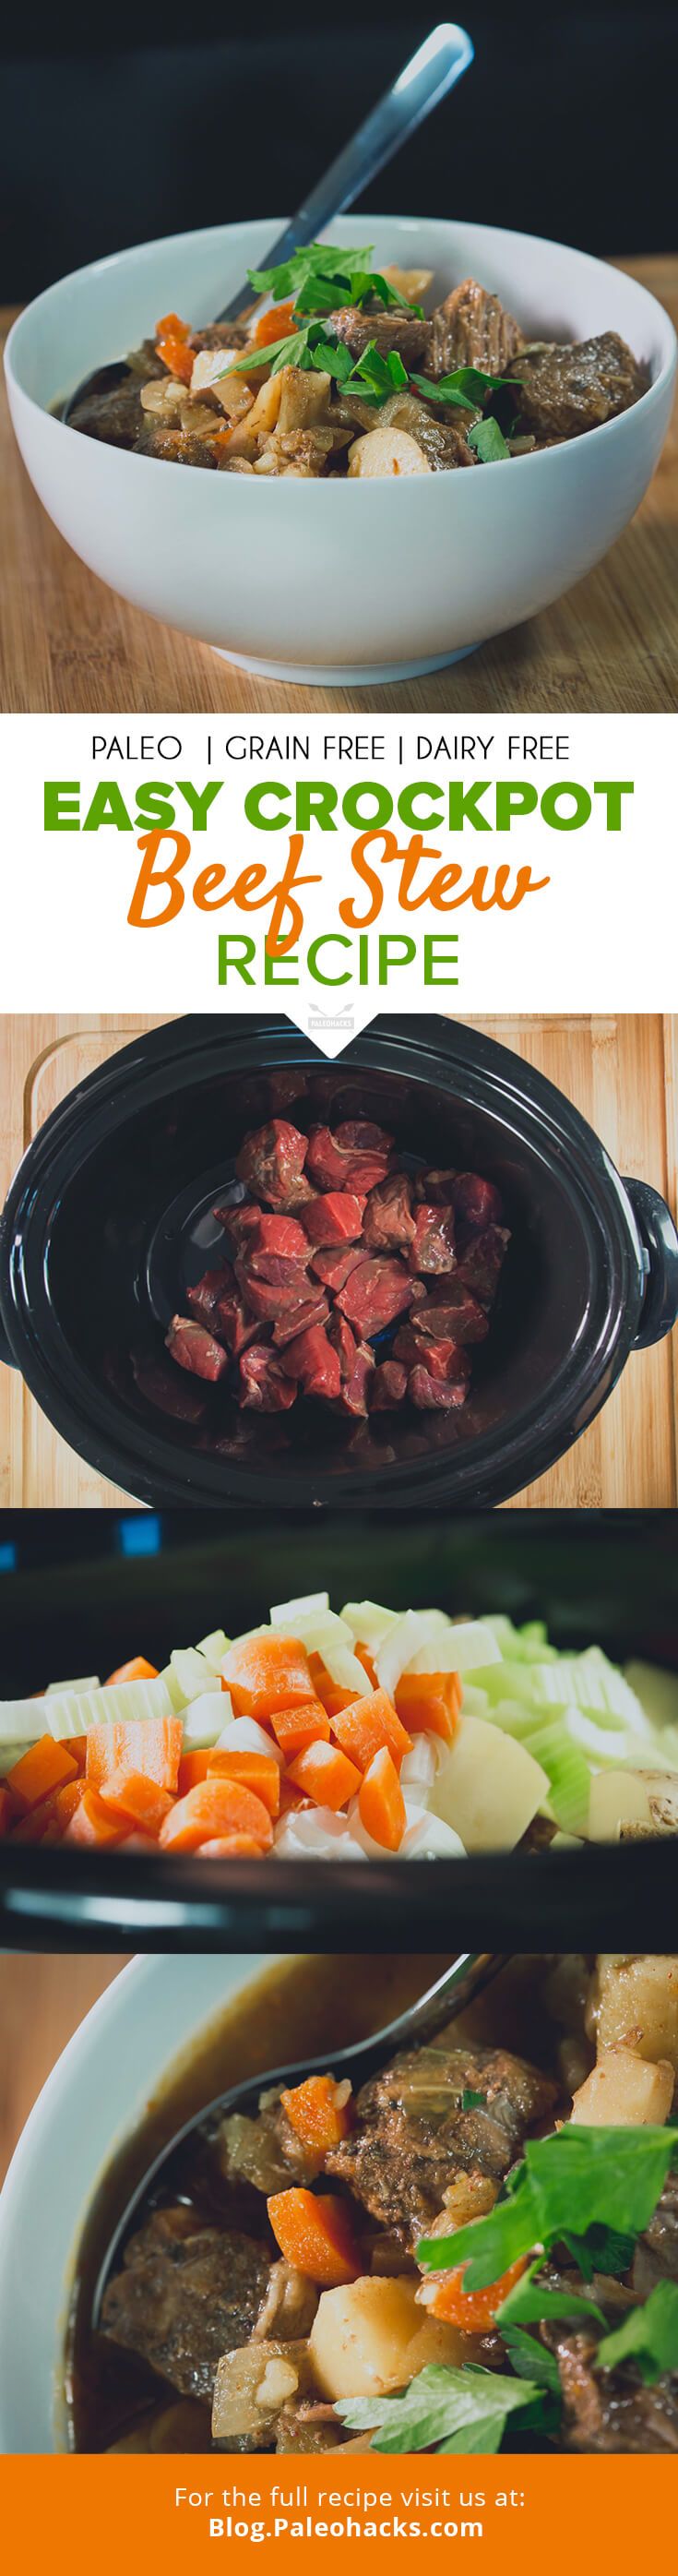 pin-Easy-crockpot-beef-stew-recipe